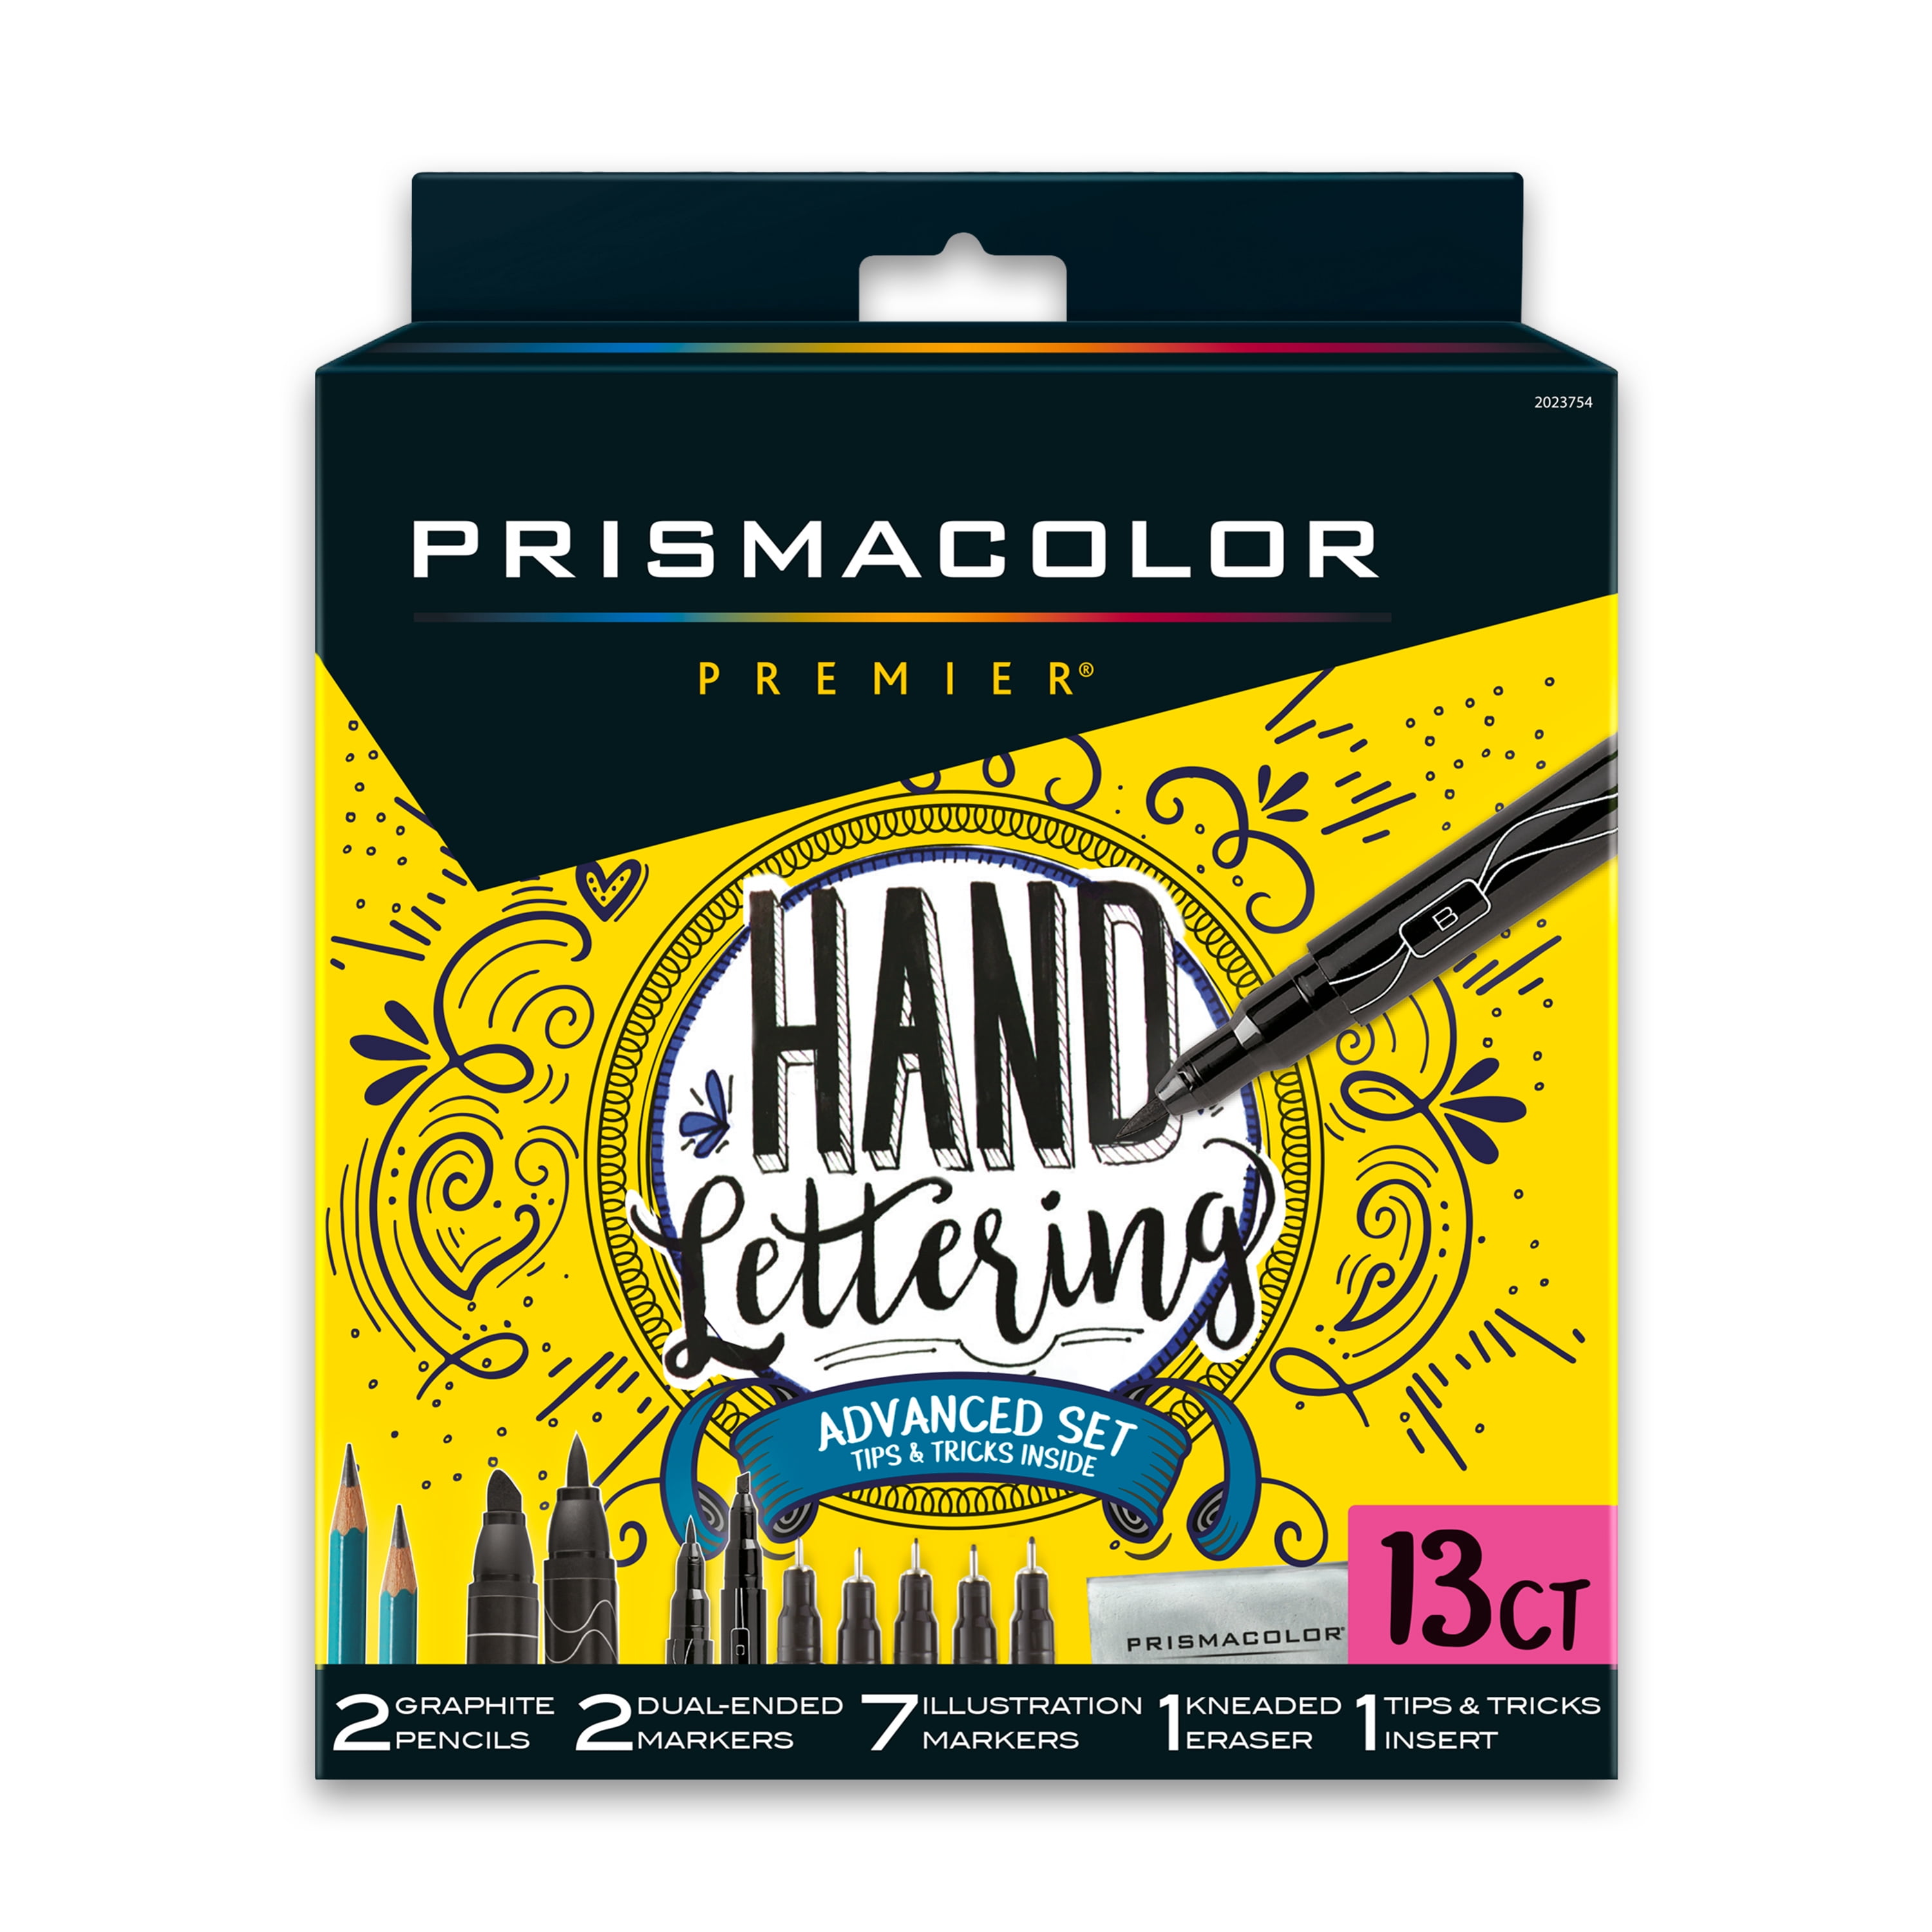 Art Markers Eraser and Tips Pamphlet 13 Count Pencils Renewed Prismacolor 2023754 Premier Advanced Hand Lettering Set with Illustration Markers 